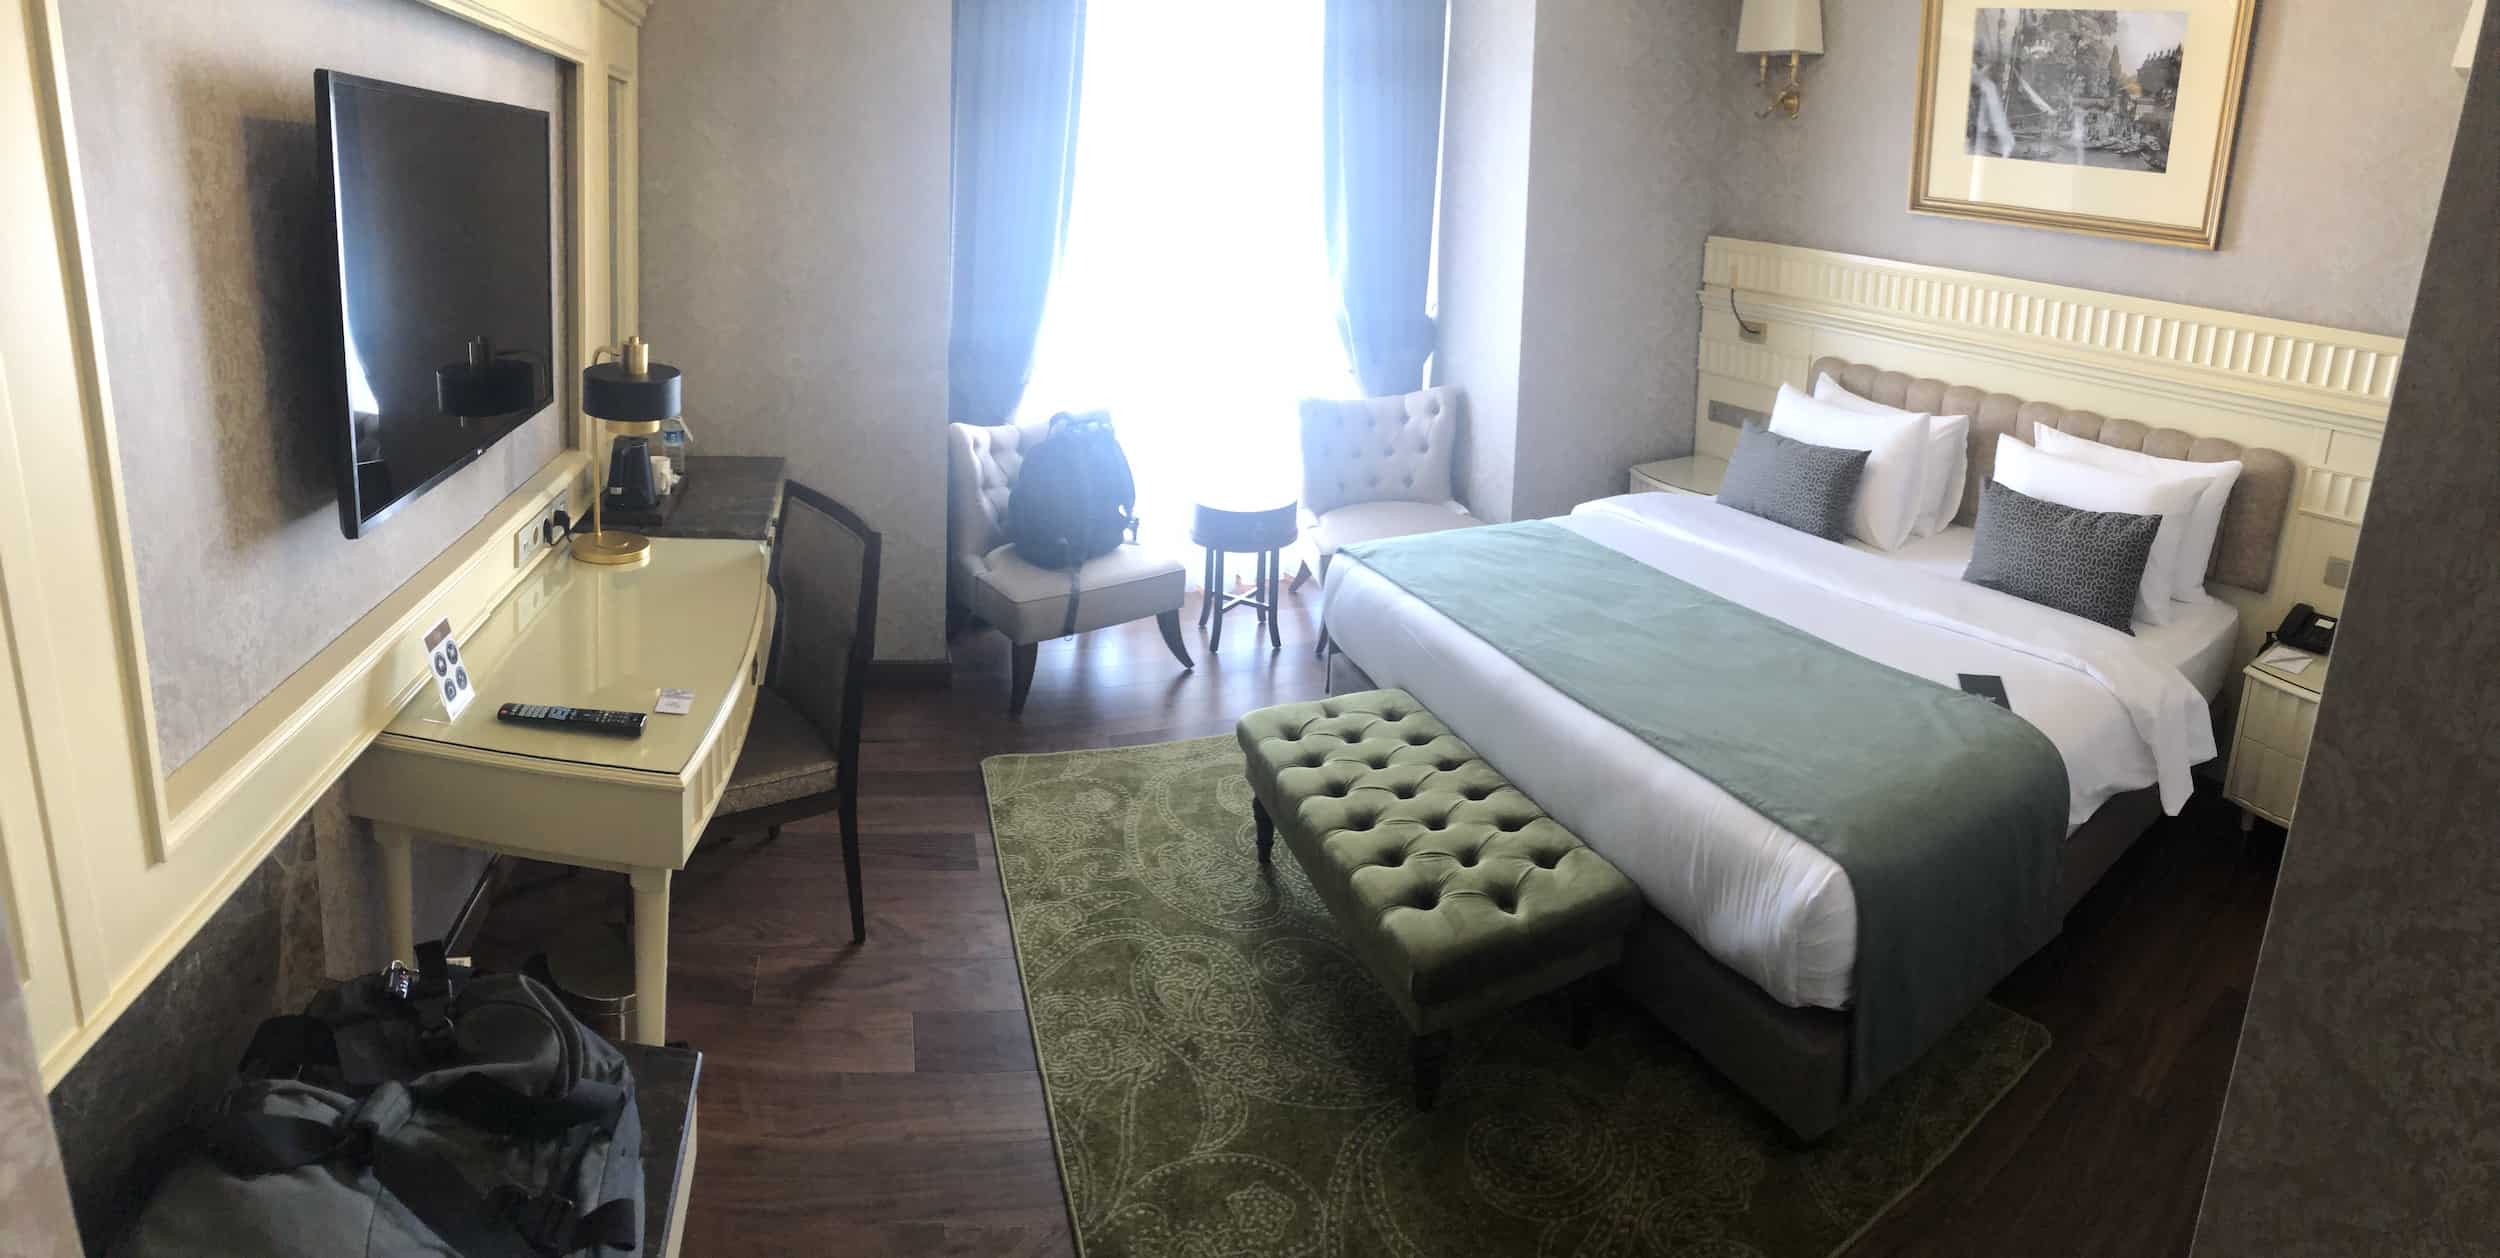 My room at the Aspera Hotel in Istanbul, Turkey